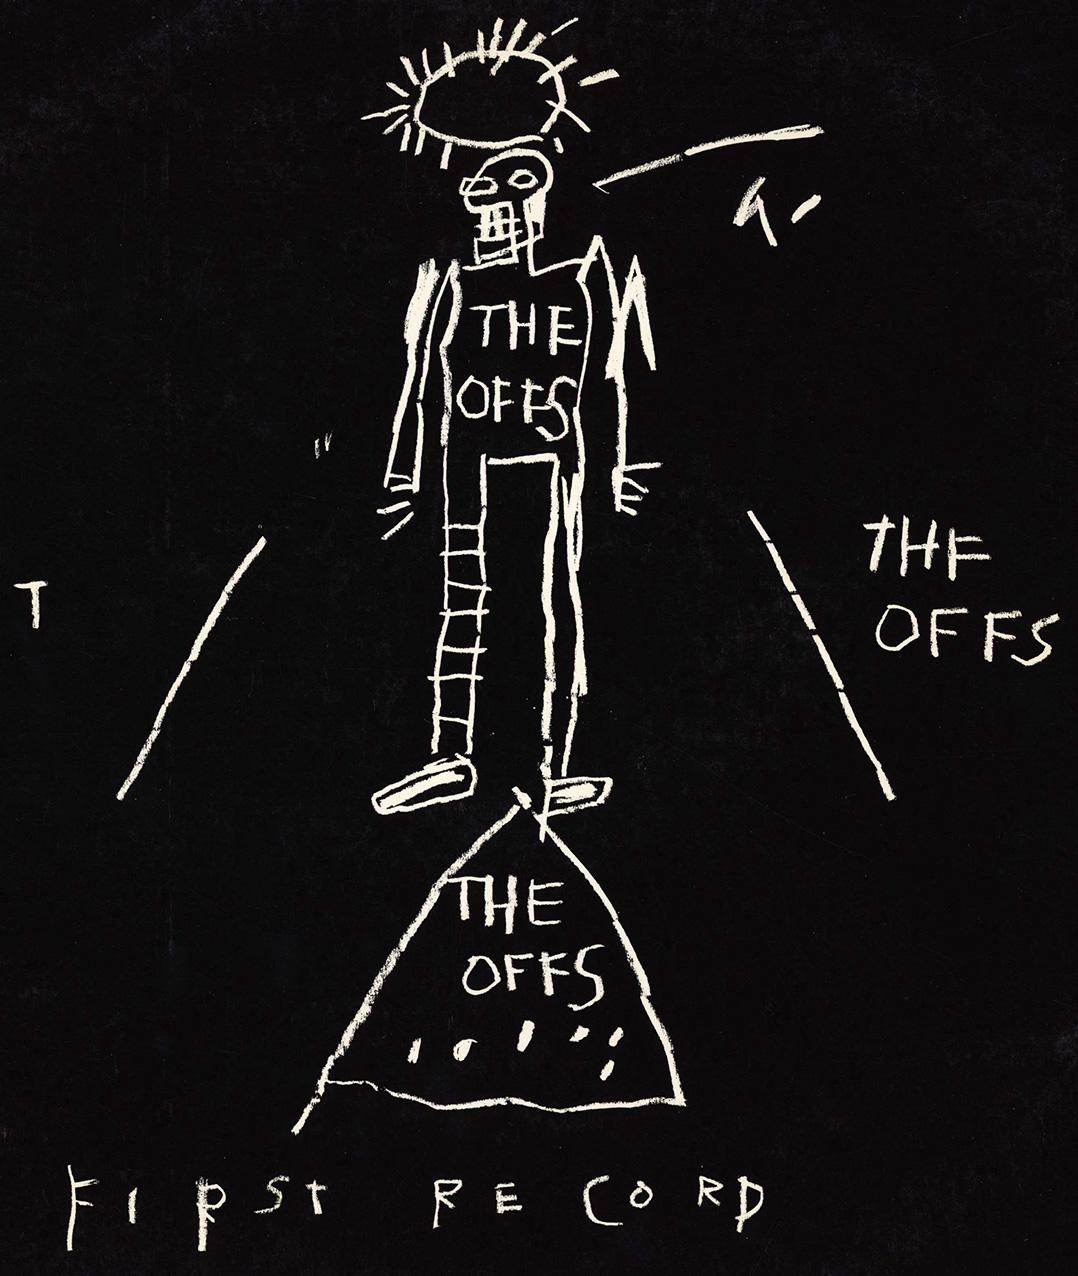 Basquiat The Offs 1984 record album (Basquiat record art)  - Pop Art Art by Jean-Michel Basquiat